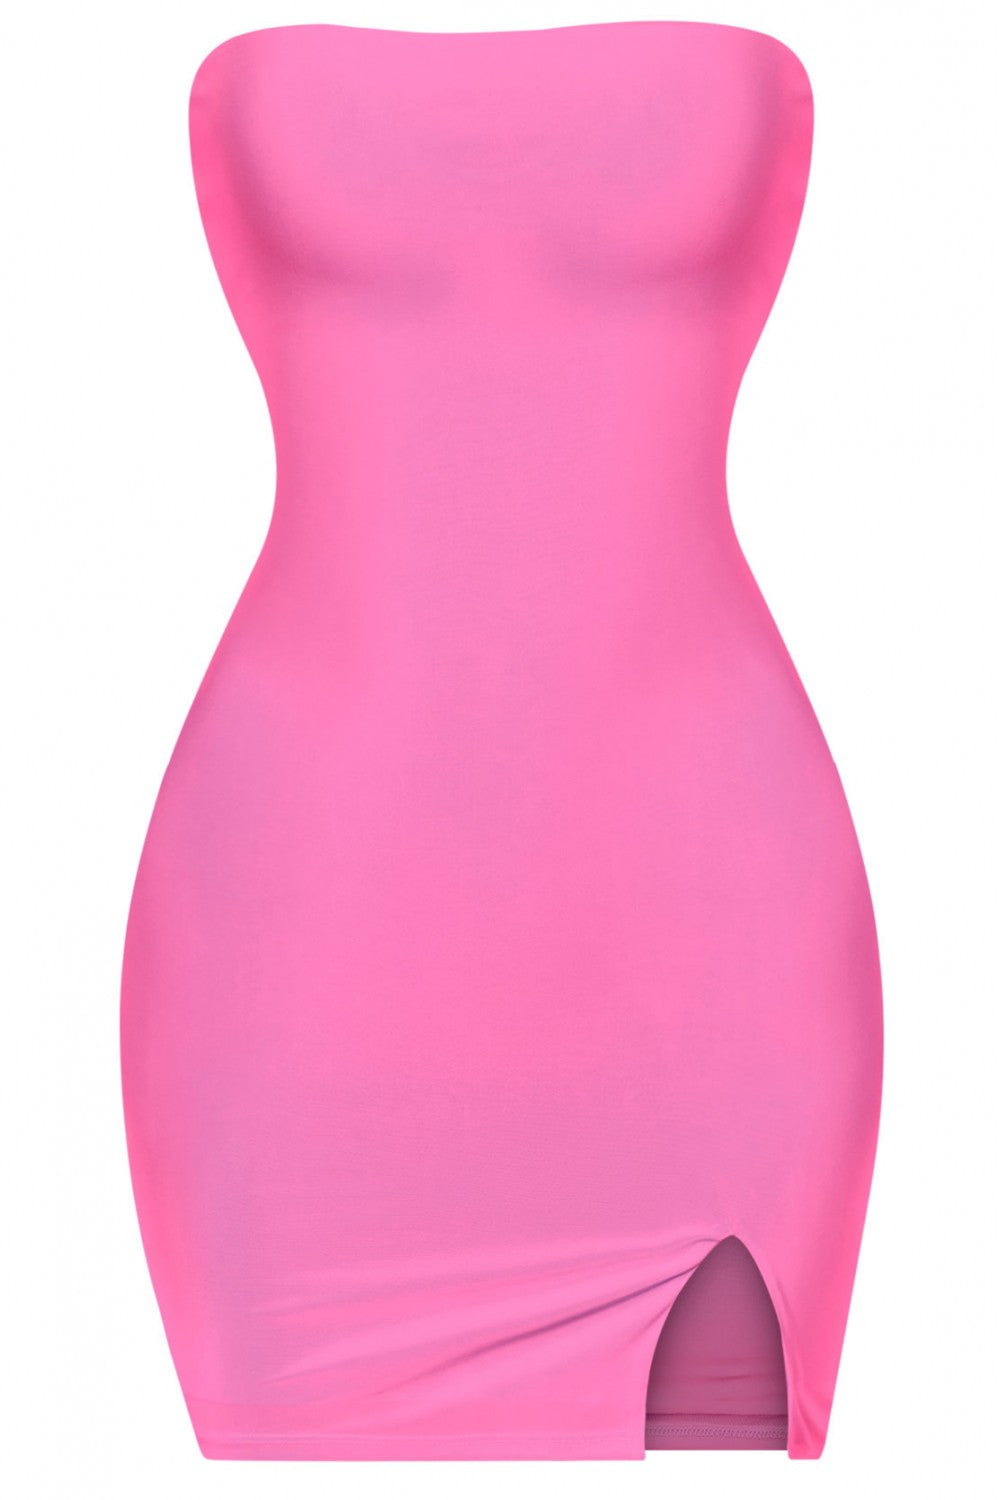 Breeyana Hot Pink Tube Side Slit Mini Dress - Style Baby OMG Fashion Boutique - Stylebabyomg - Buy - Aesthetic Baddie Outfits - Babyboo - OOTD - Shie 